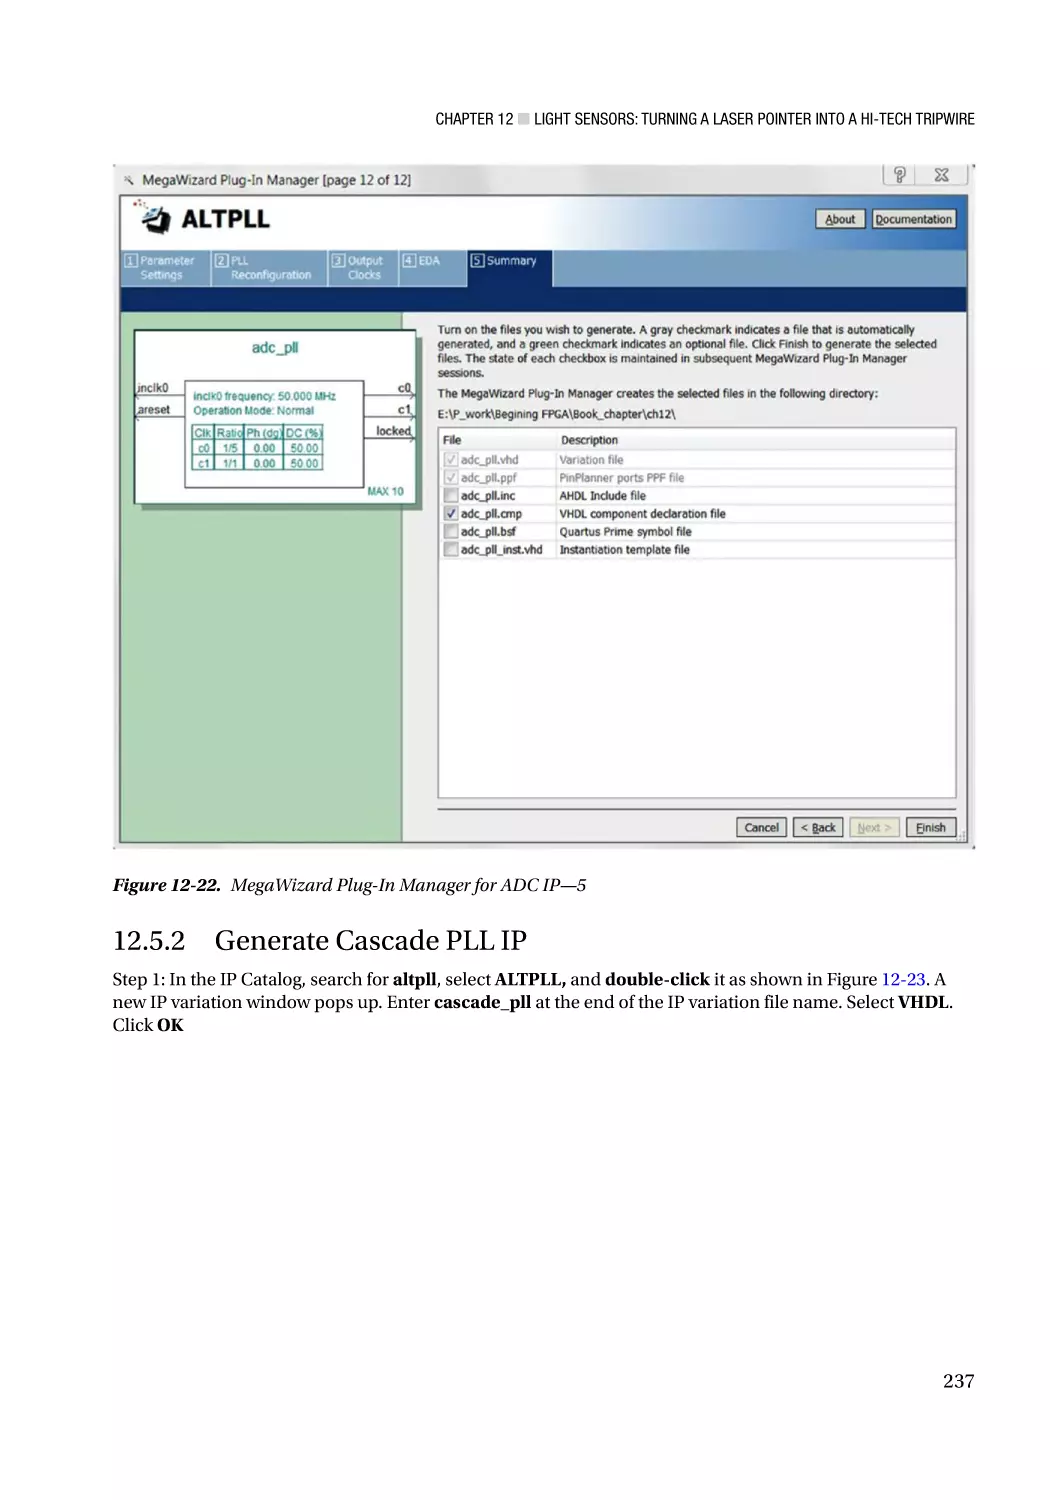 12.5.2 Generate Cascade PLL IP